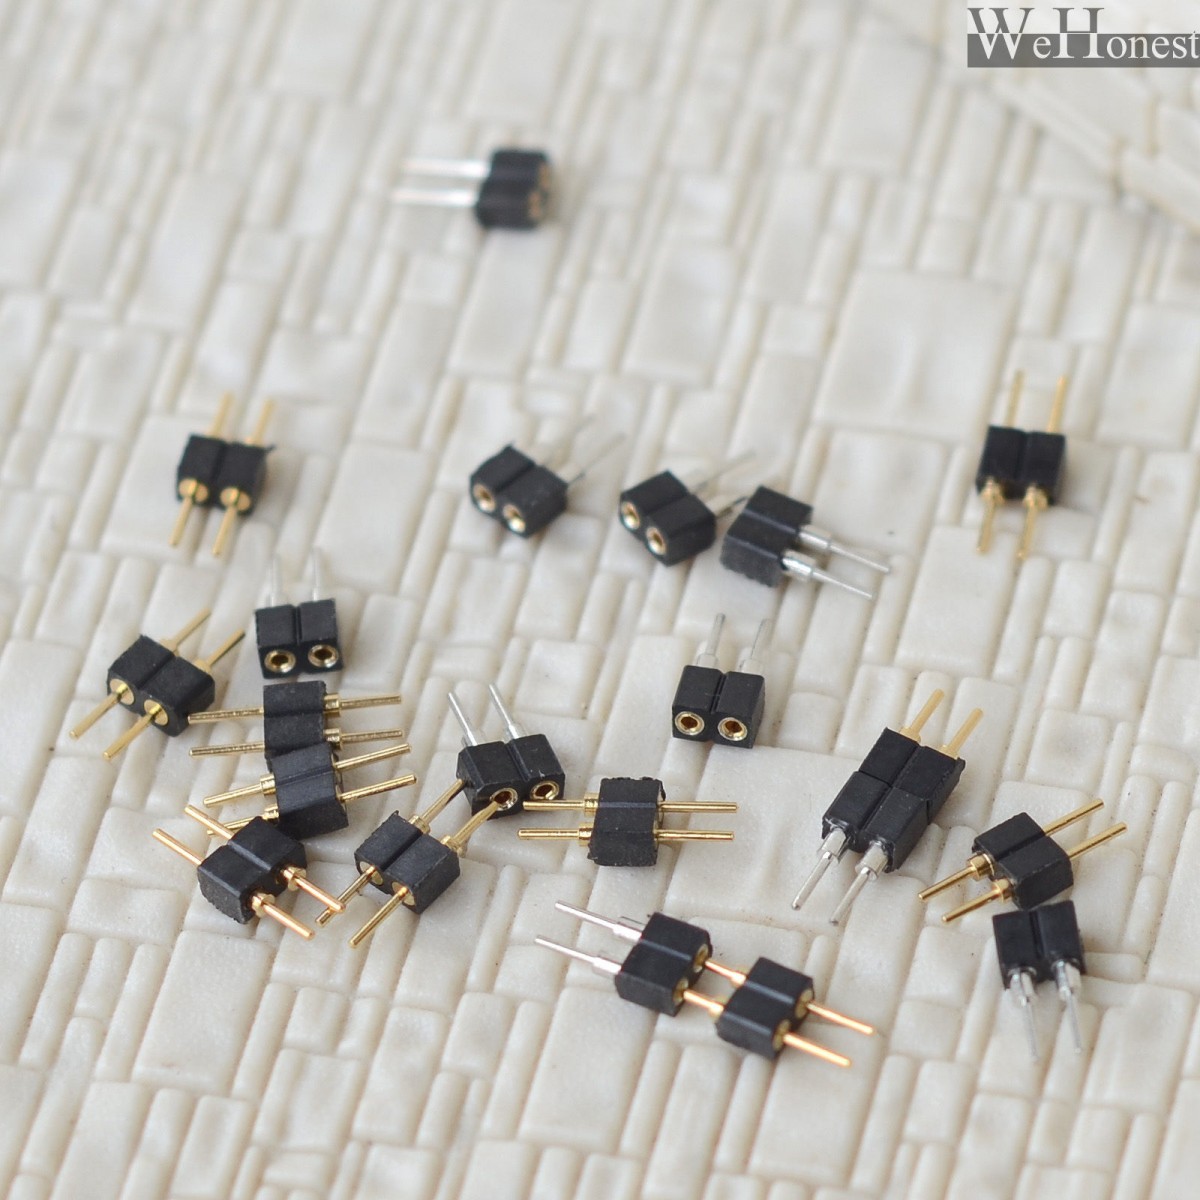 10 pairs 2 Pins mini-plug kits 2.0mm straight connectors round male + female